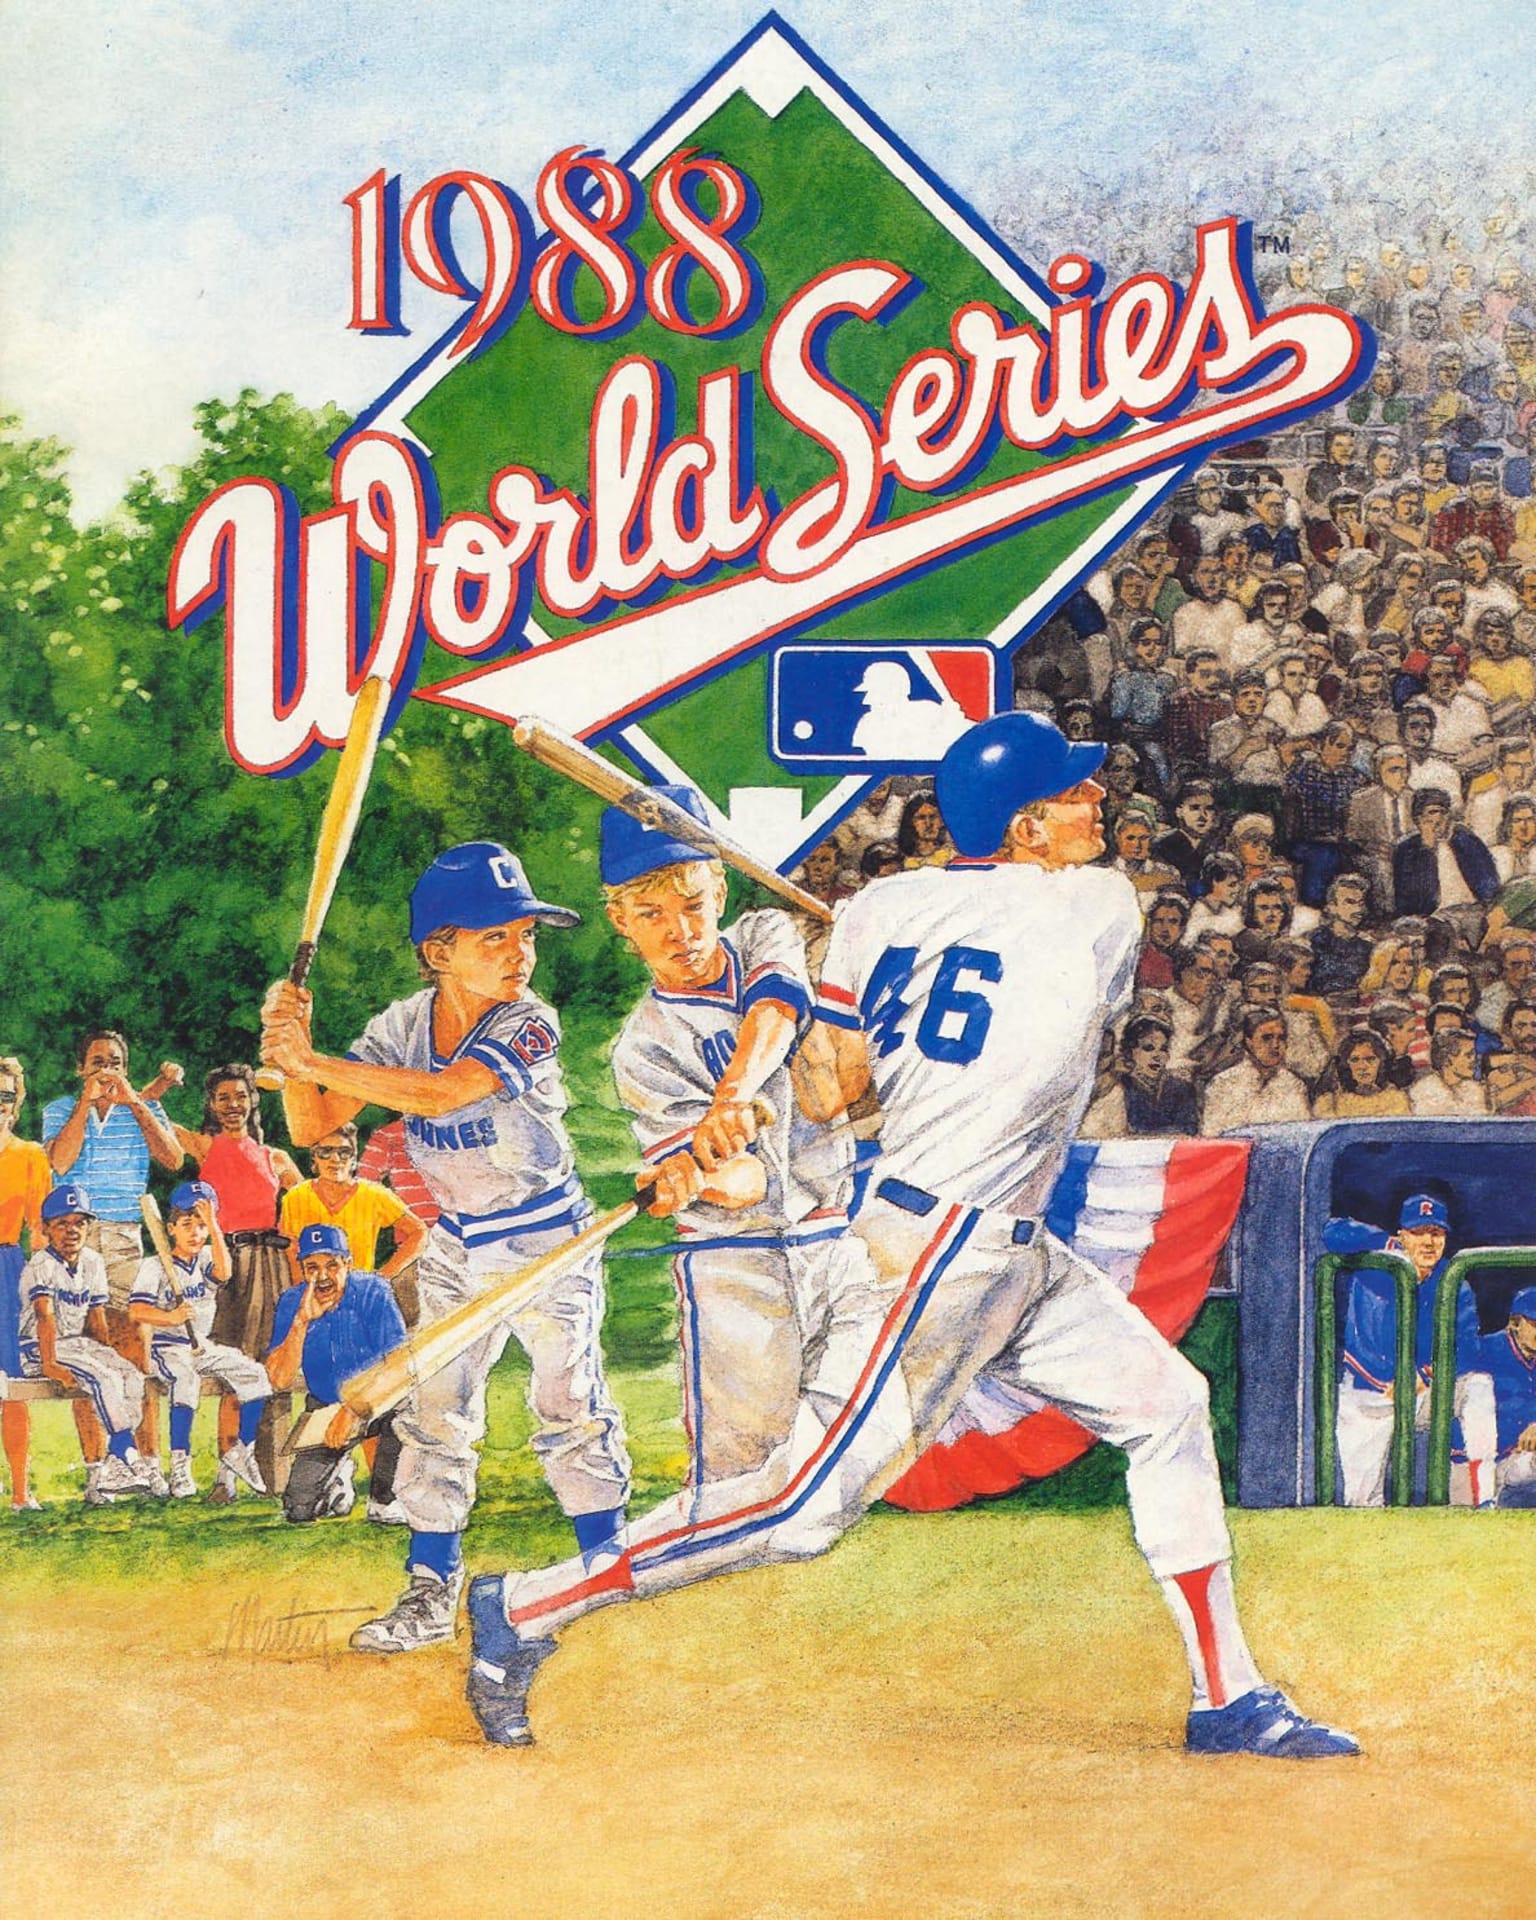 1988 Los Angeles Dodgers World Series Trophy. Baseball